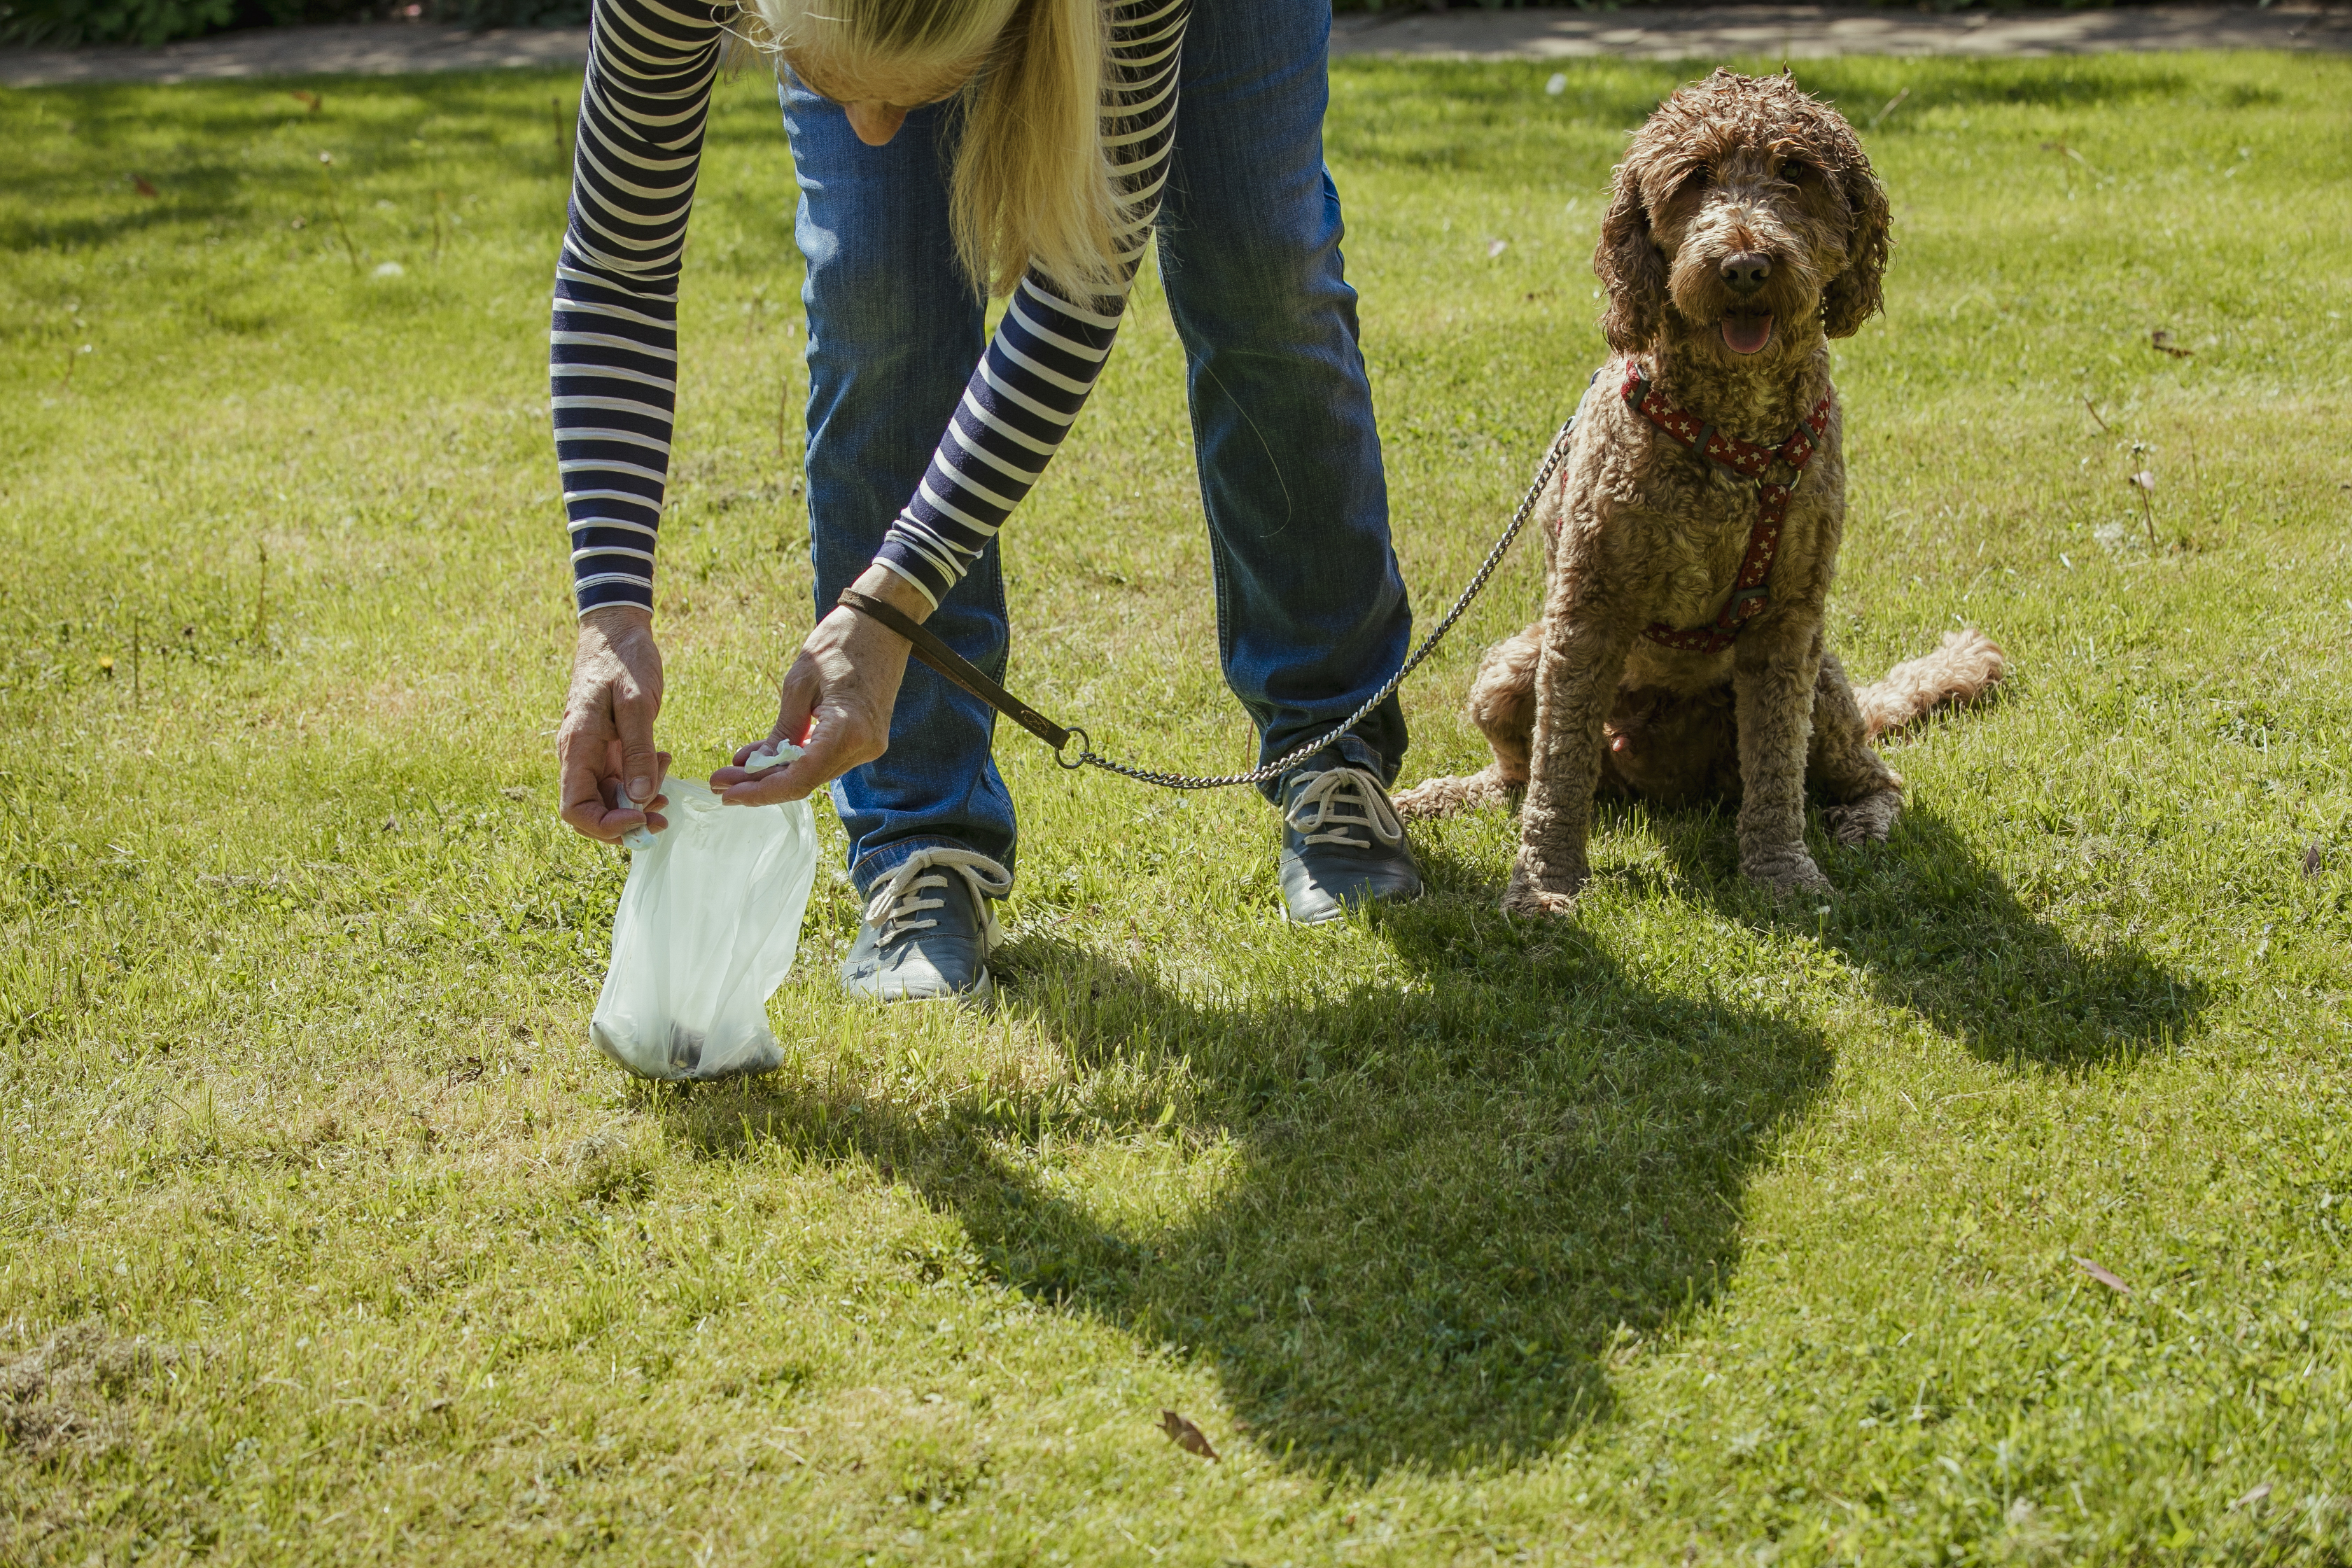 MUTT MITT Dog Waste & Poop Pick Up Bag, 100 count 